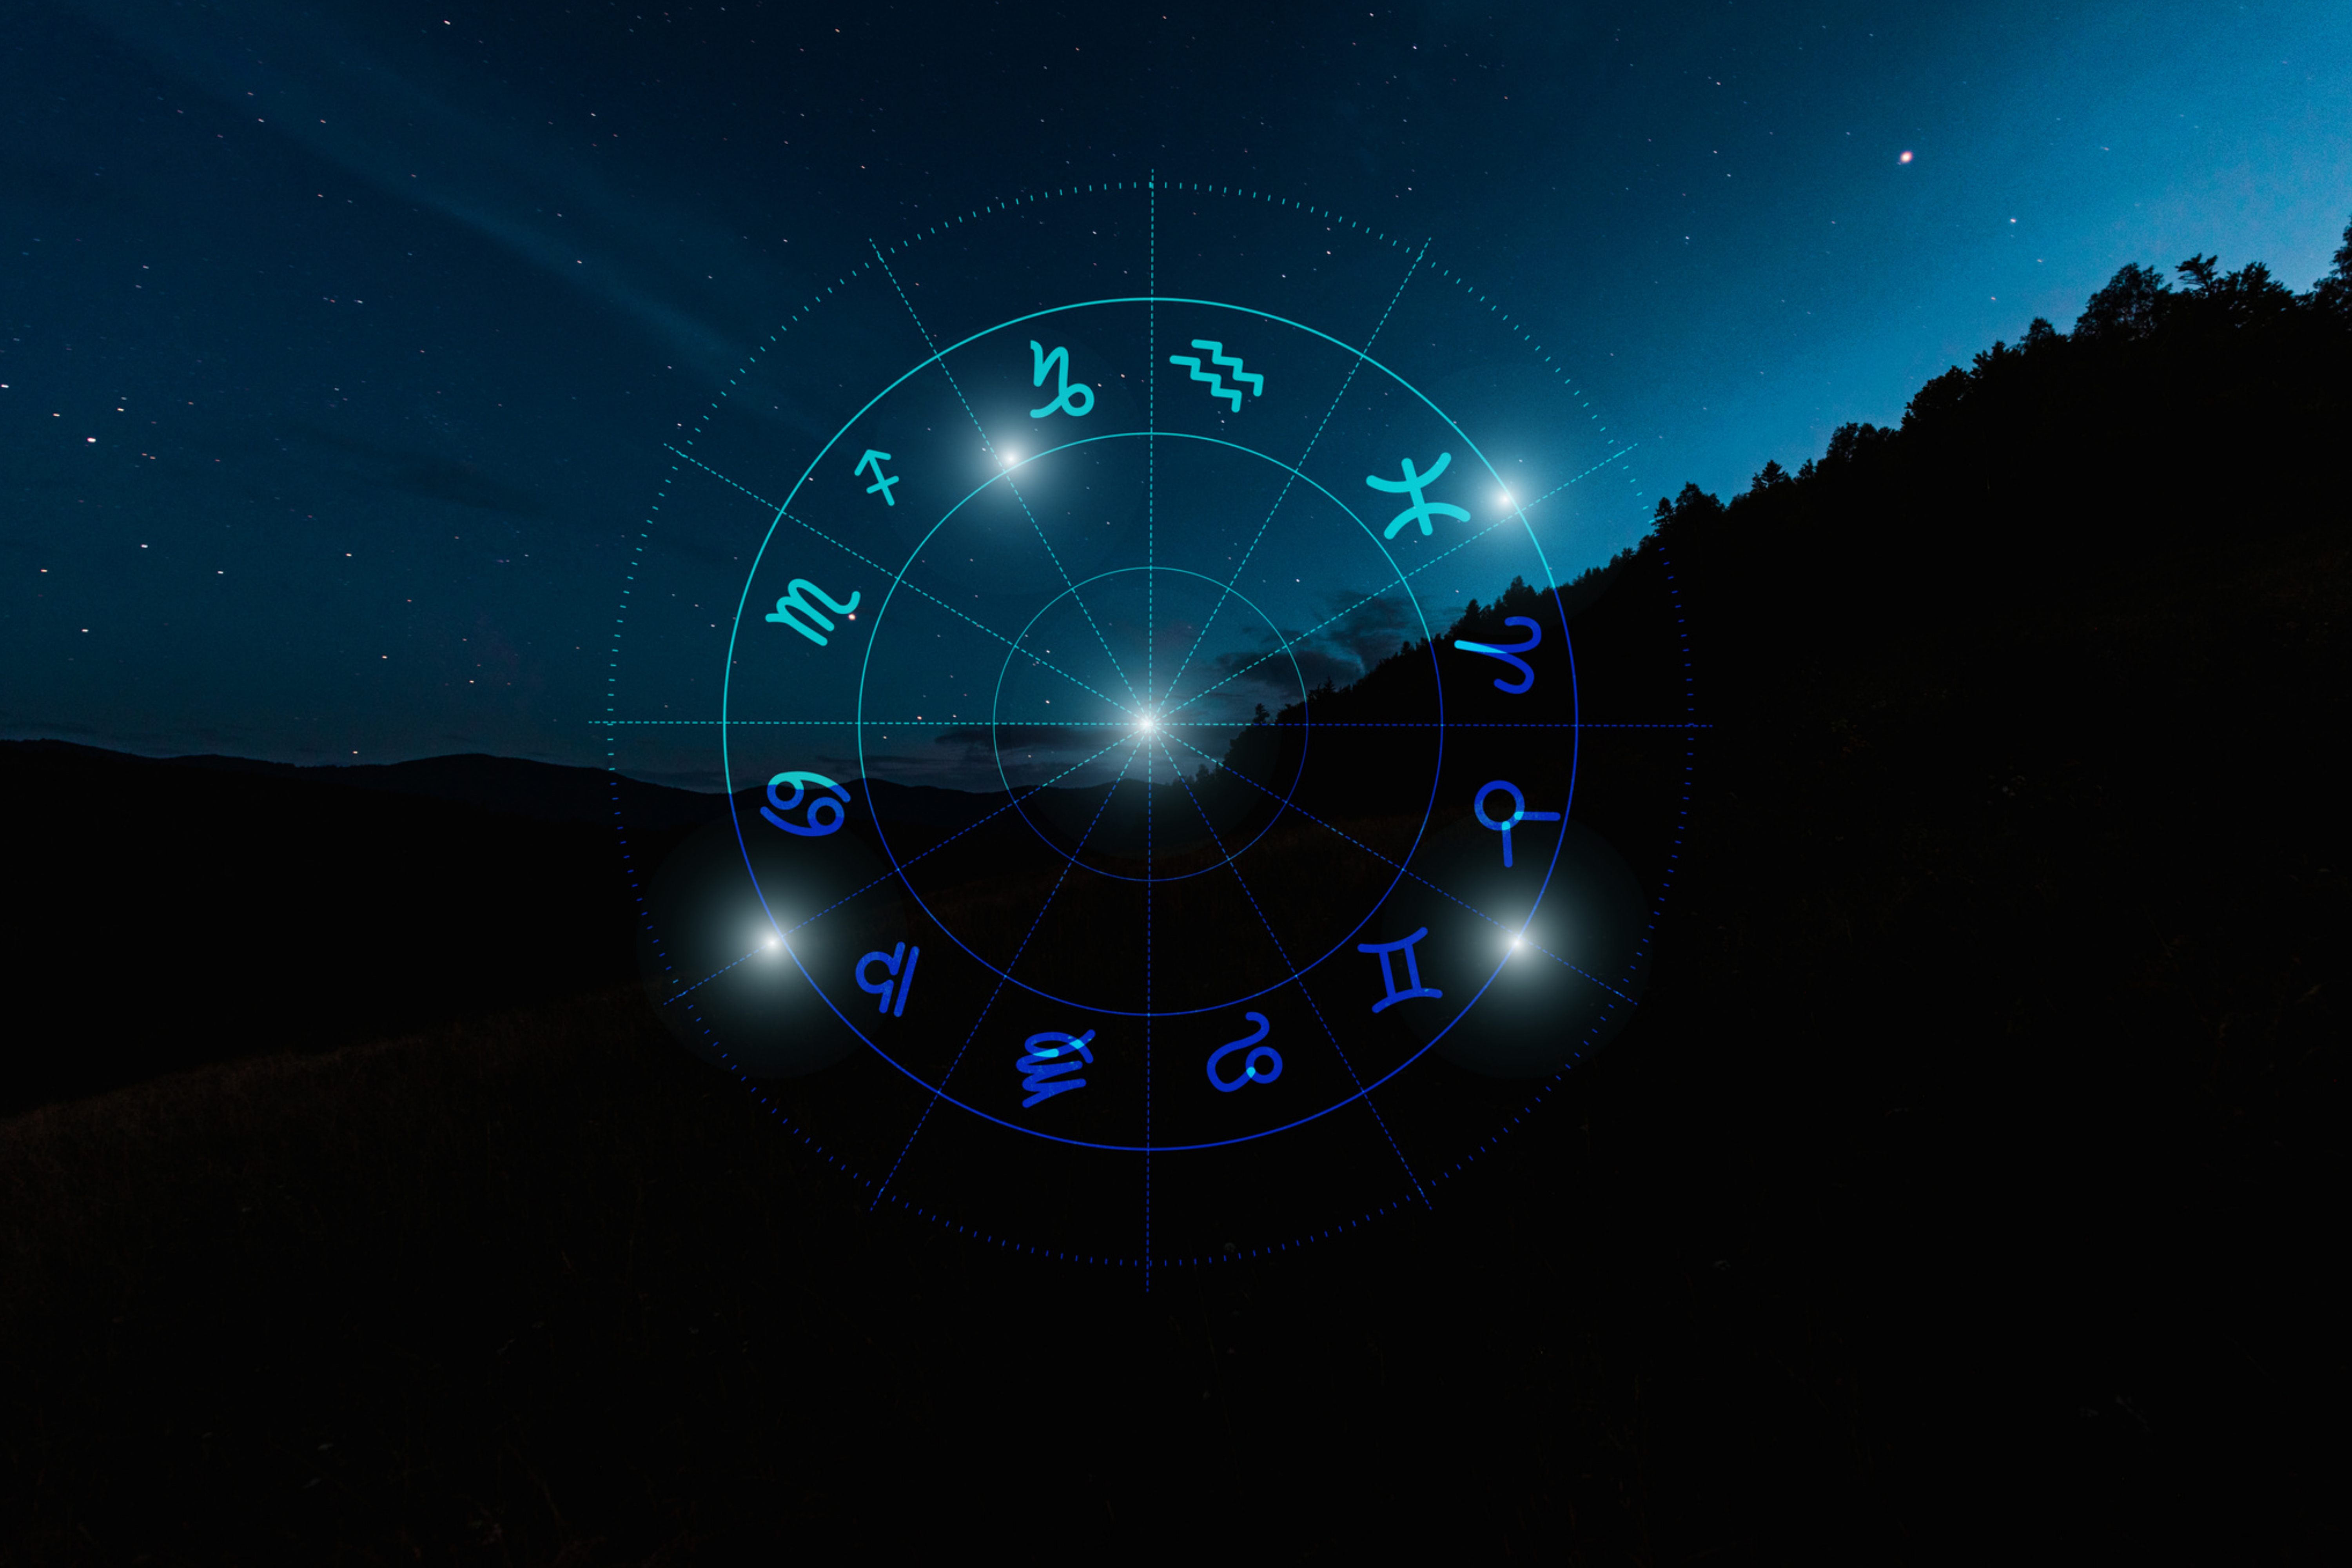 4. Astronomy Nights